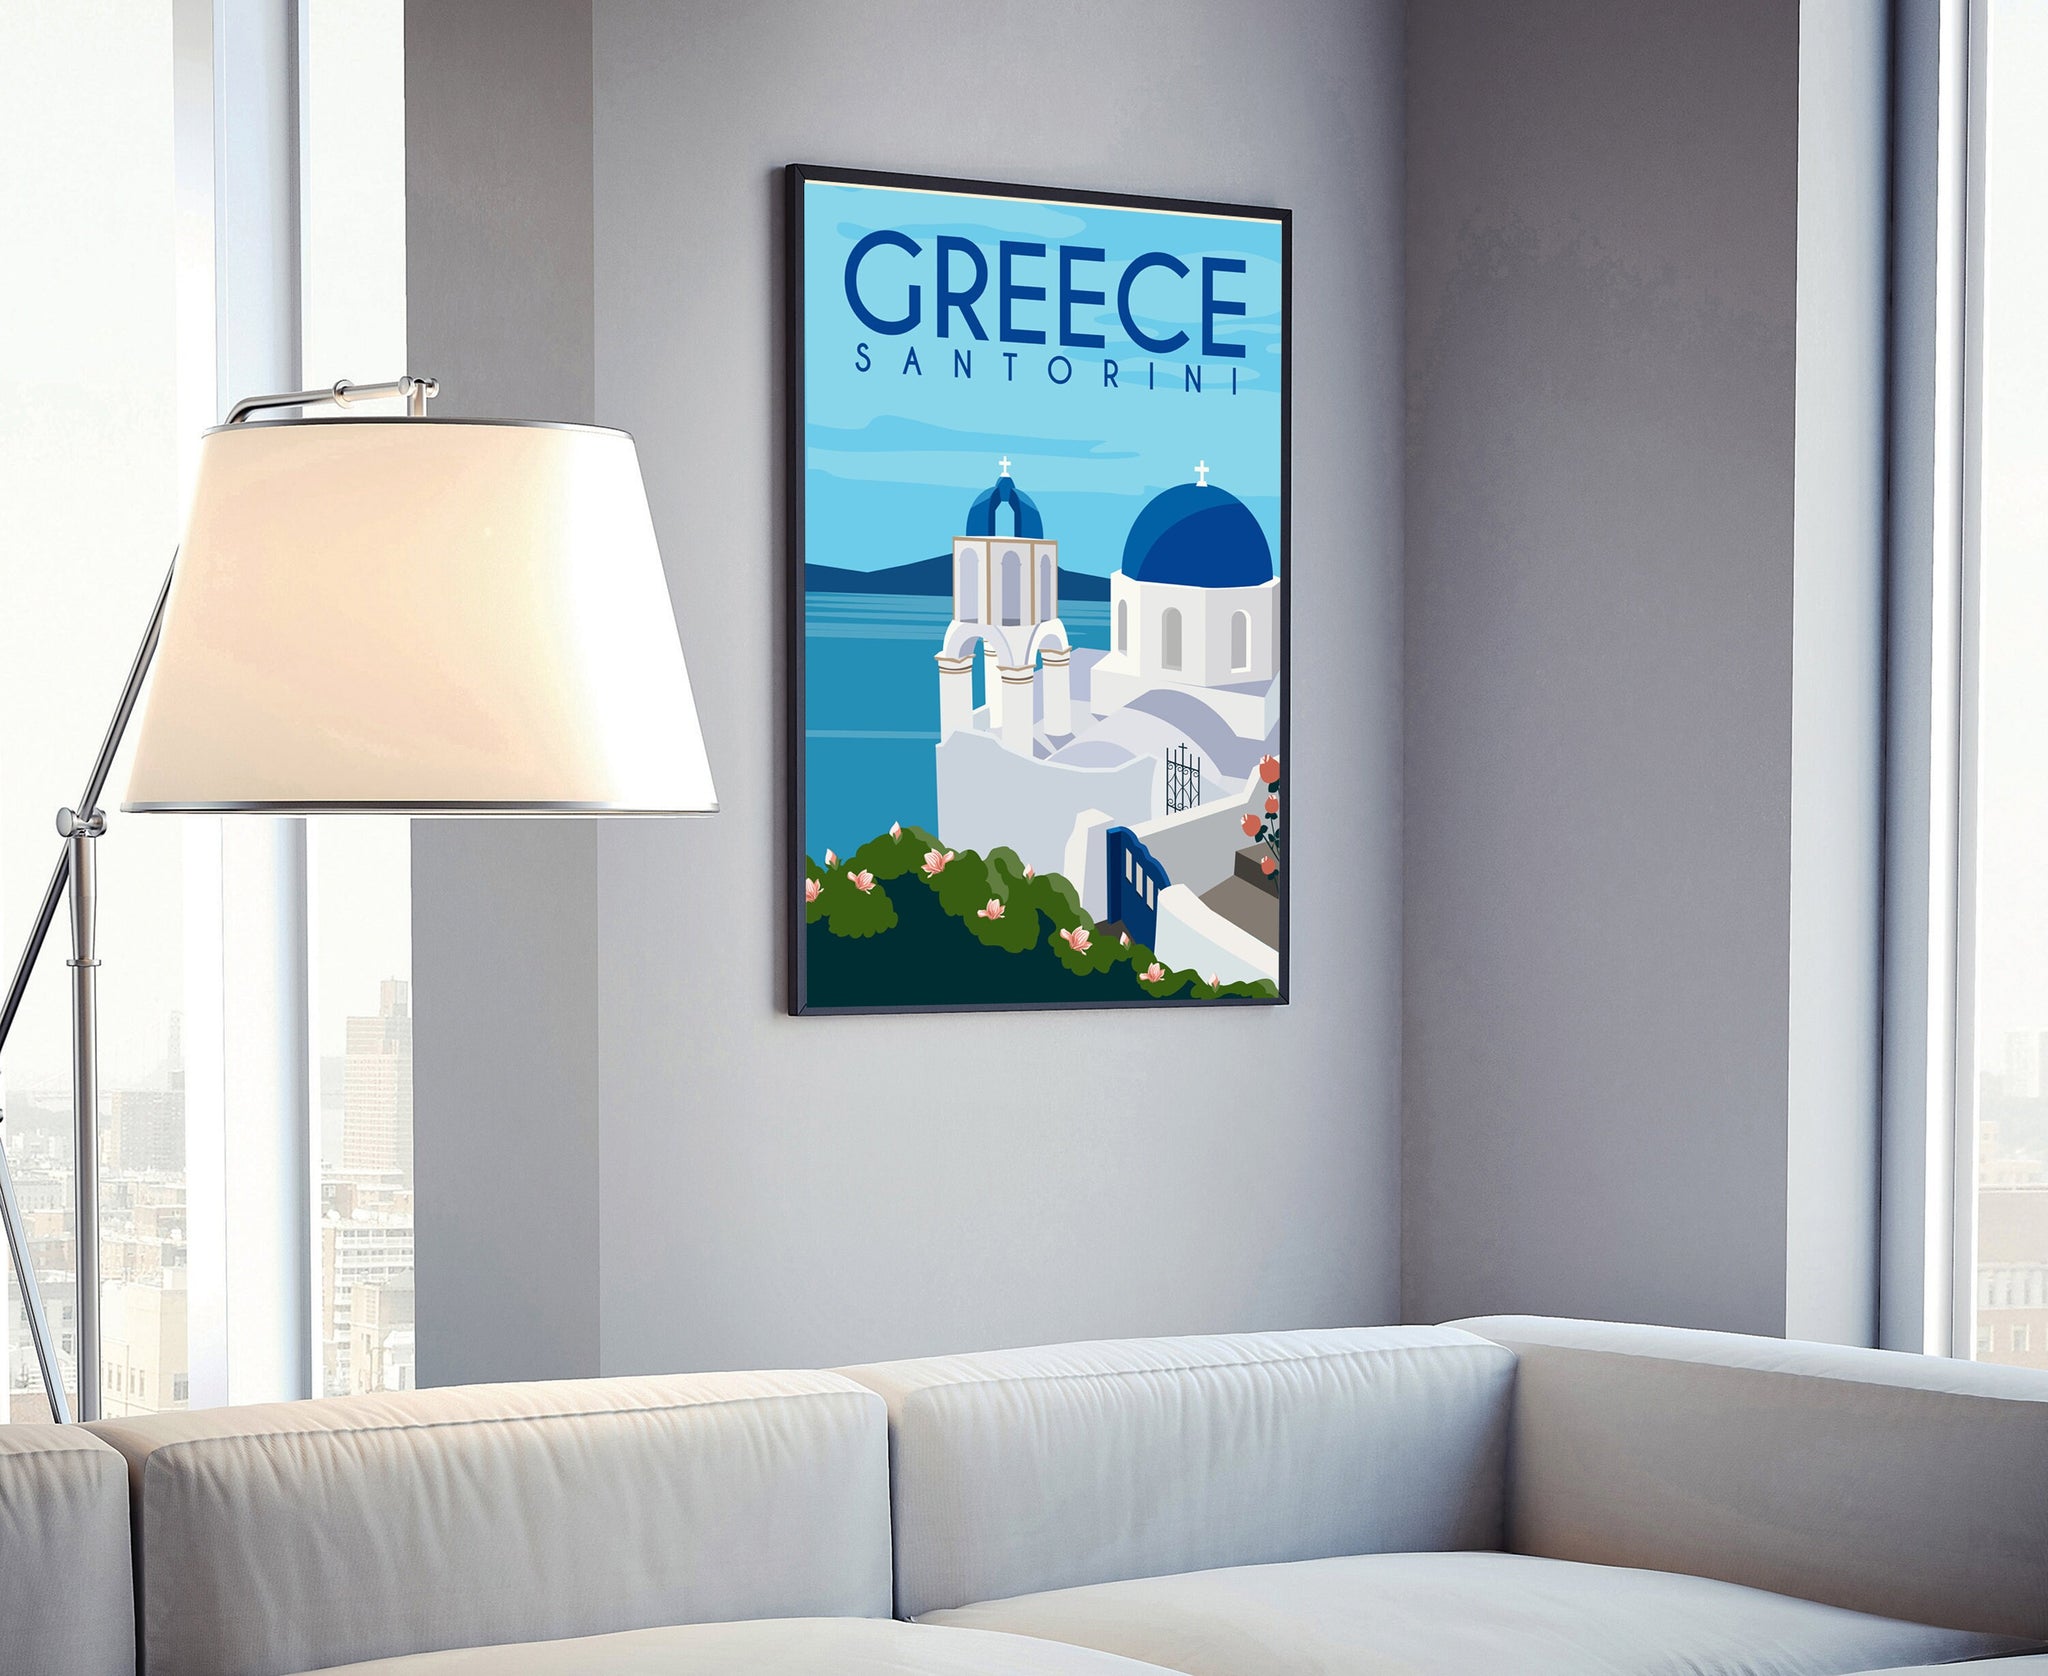 GREECE SANTORINI retro style travel poster, Santorini rustic poster print, Home wall art, Office wall decorations, GREECE map poster print